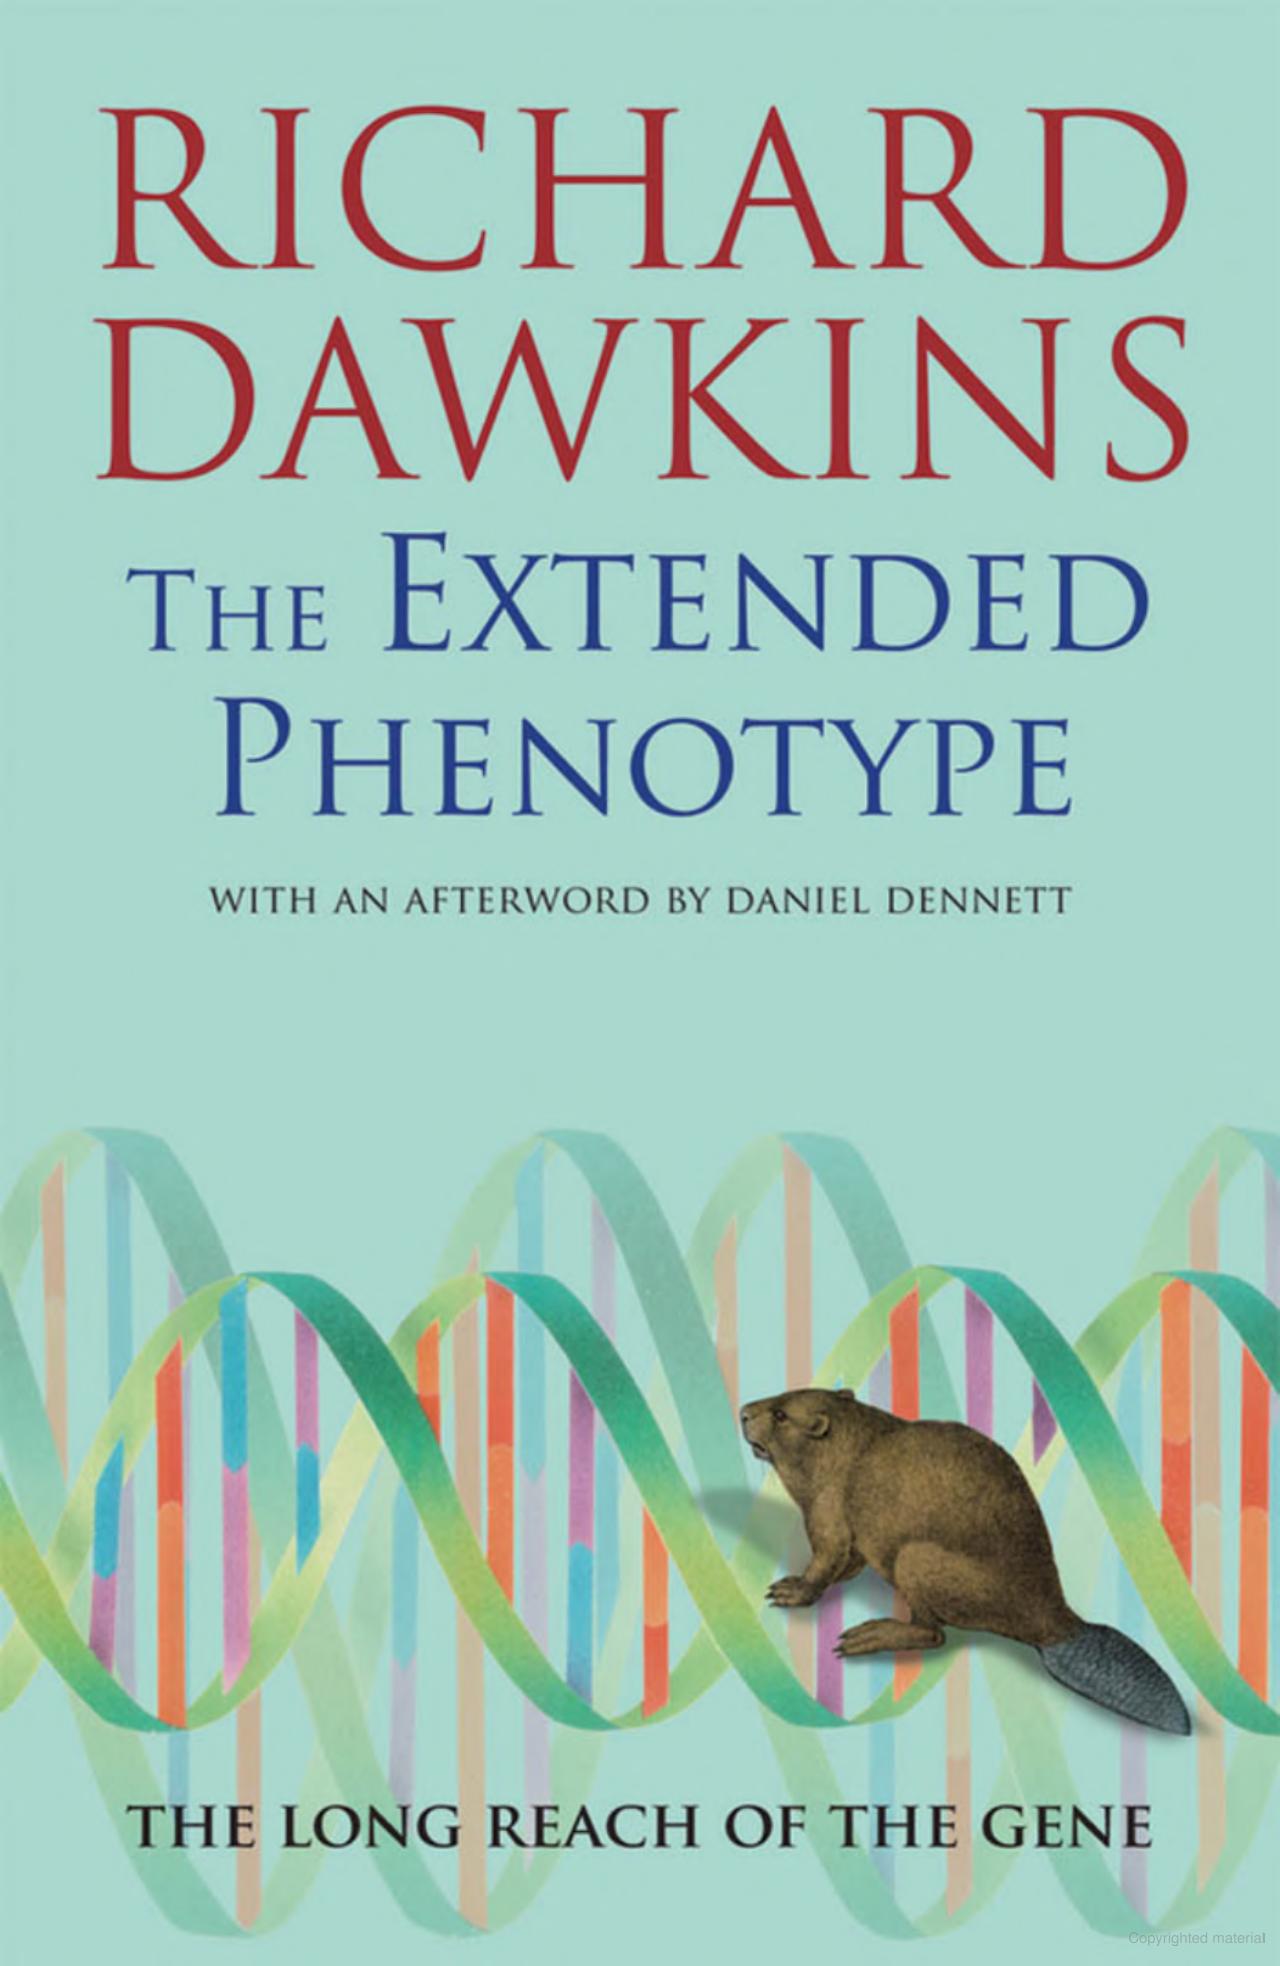 Richard Dawkins: The Extended Phenotype (1999, Oxford University Press)